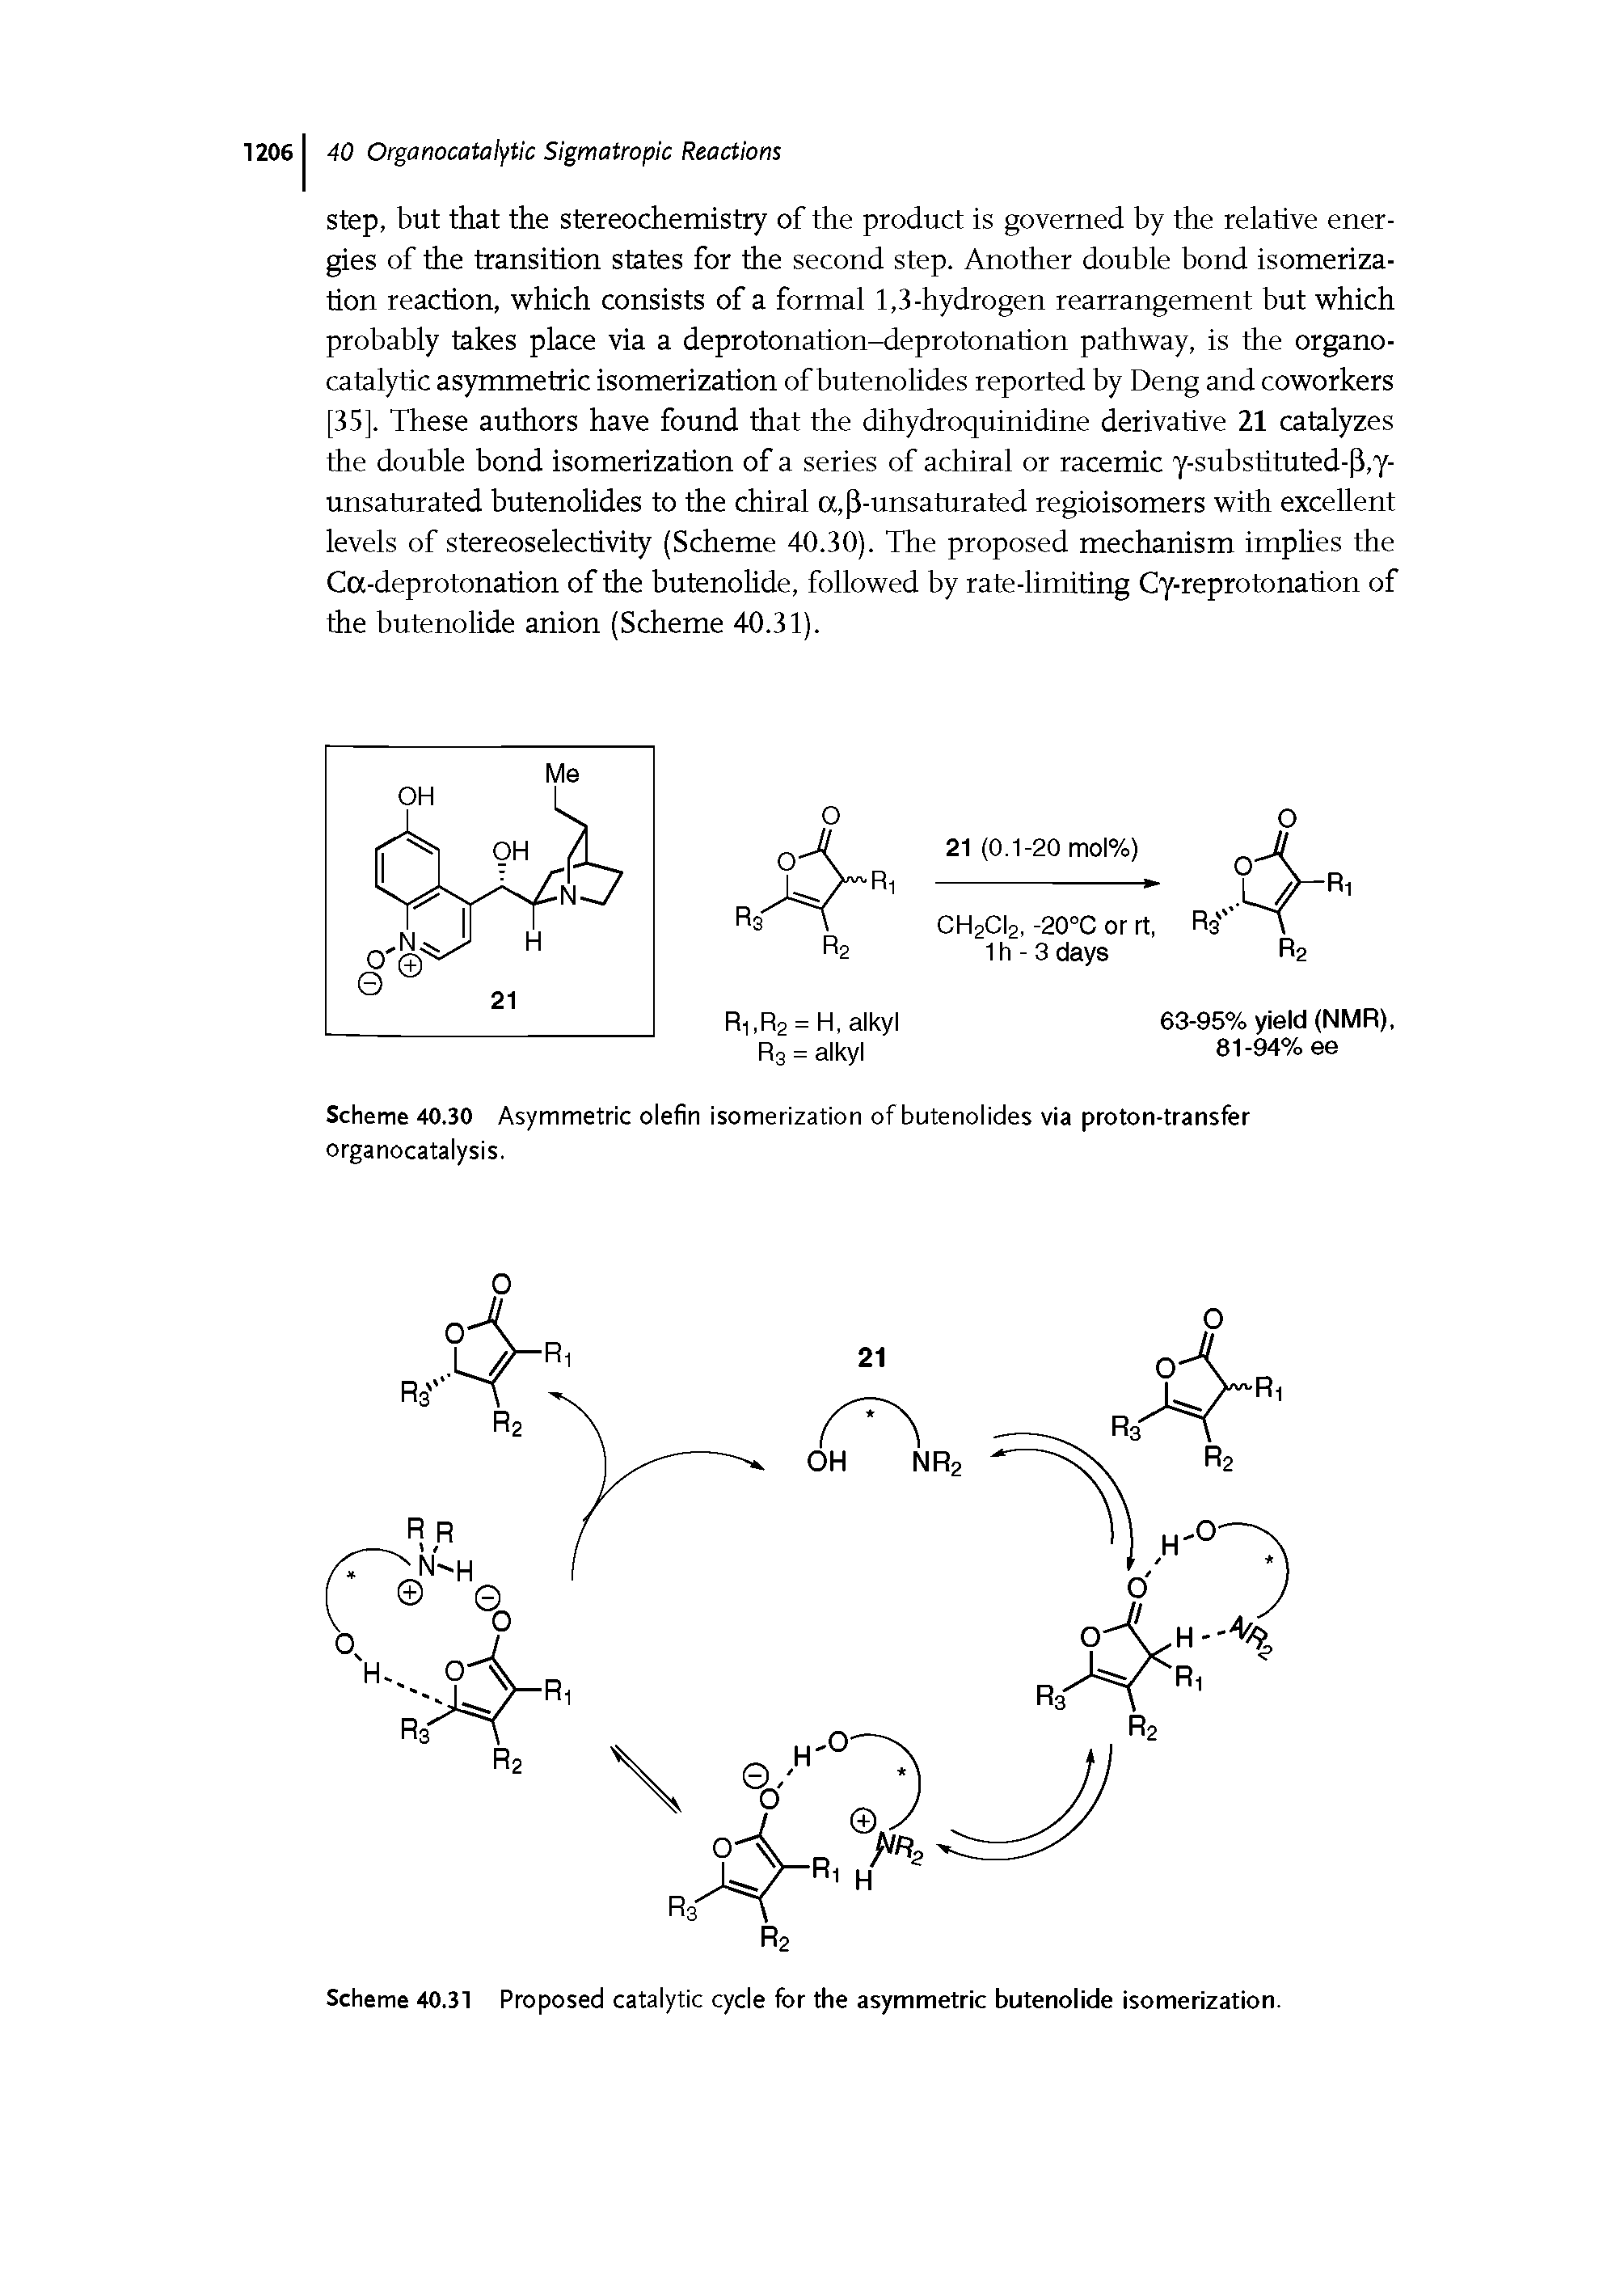 Scheme 40.30 Asymmetric olefin isomerization of butenolides via proton-transfer organocatalysis.